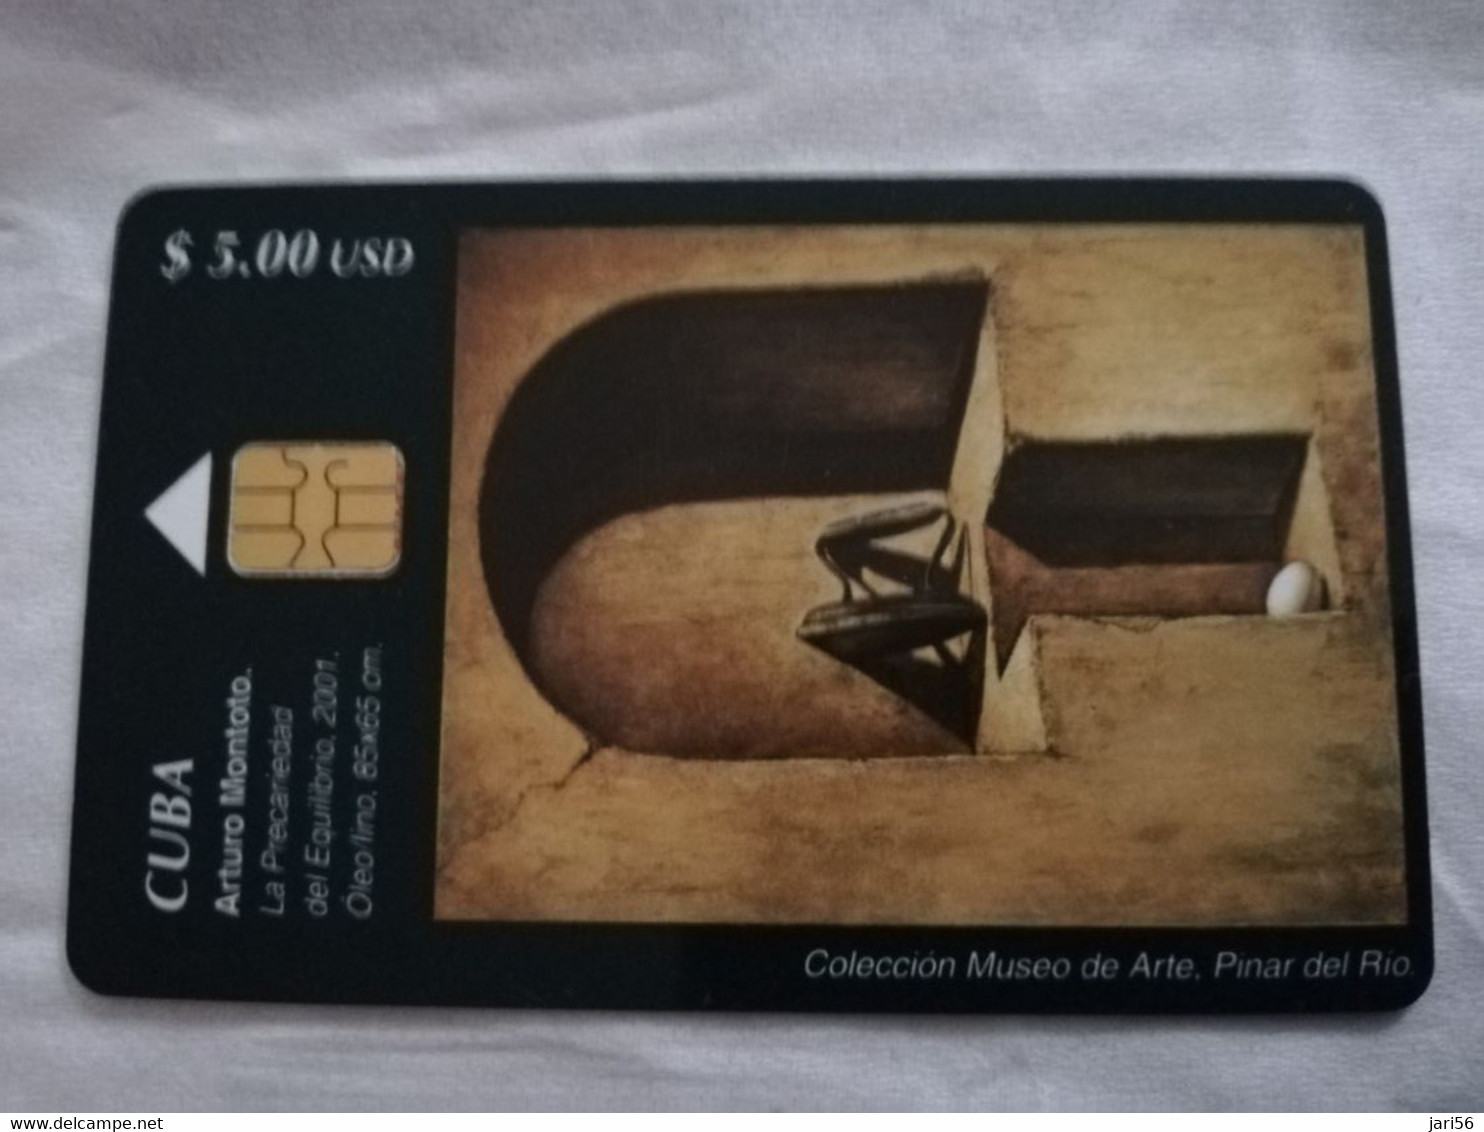 CUBA $5,00   CHIPCARD   ARTURO MONTOTO        Fine Used Card  ** 6818** - Cuba